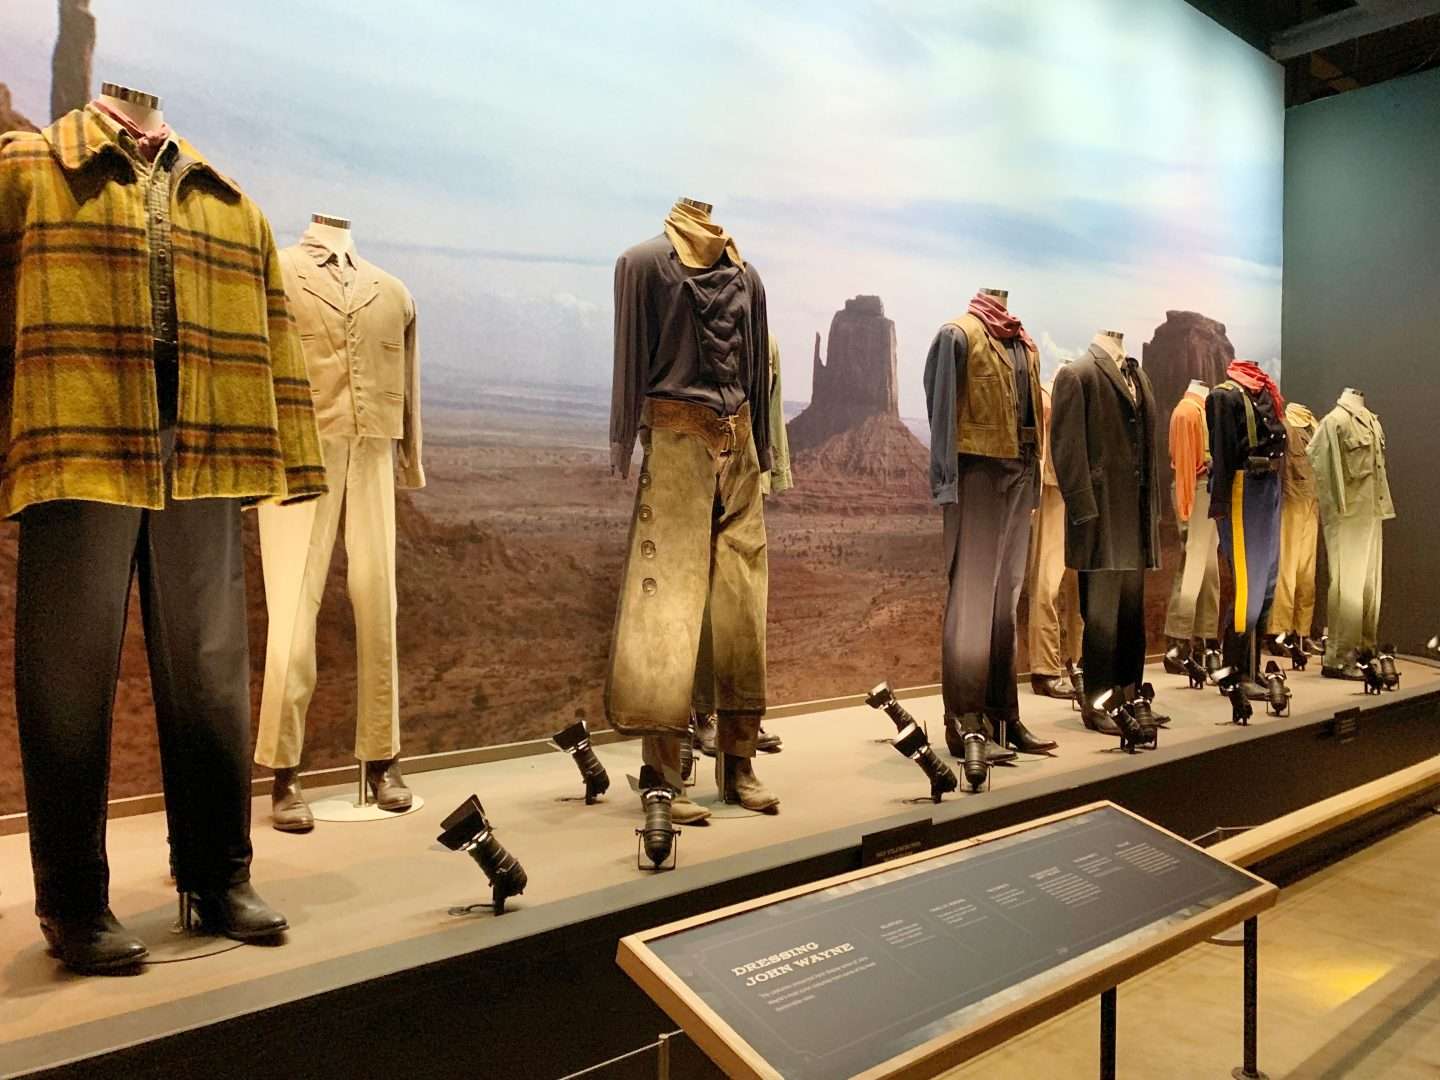 Some of John Wayne's costumes at the John Wayne museum in Forth Worth.